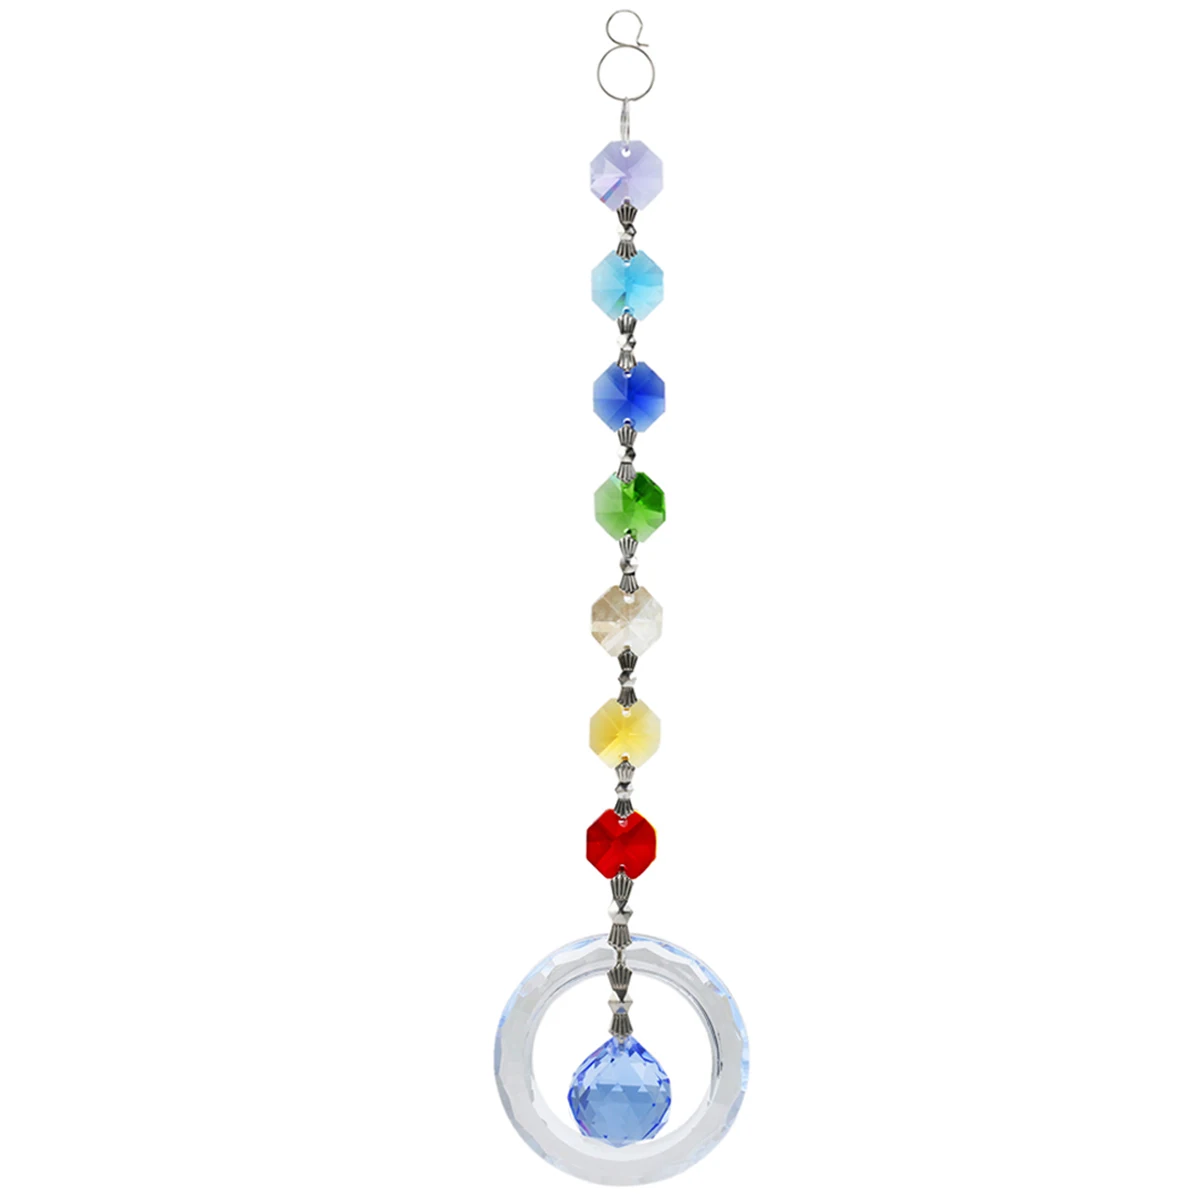 Crystal Lighting Color Crystal Ball Pendant Octagonal Bead Suncatcher Crystal Prisms DIY Jewelry Making Window Hanging Ornaments